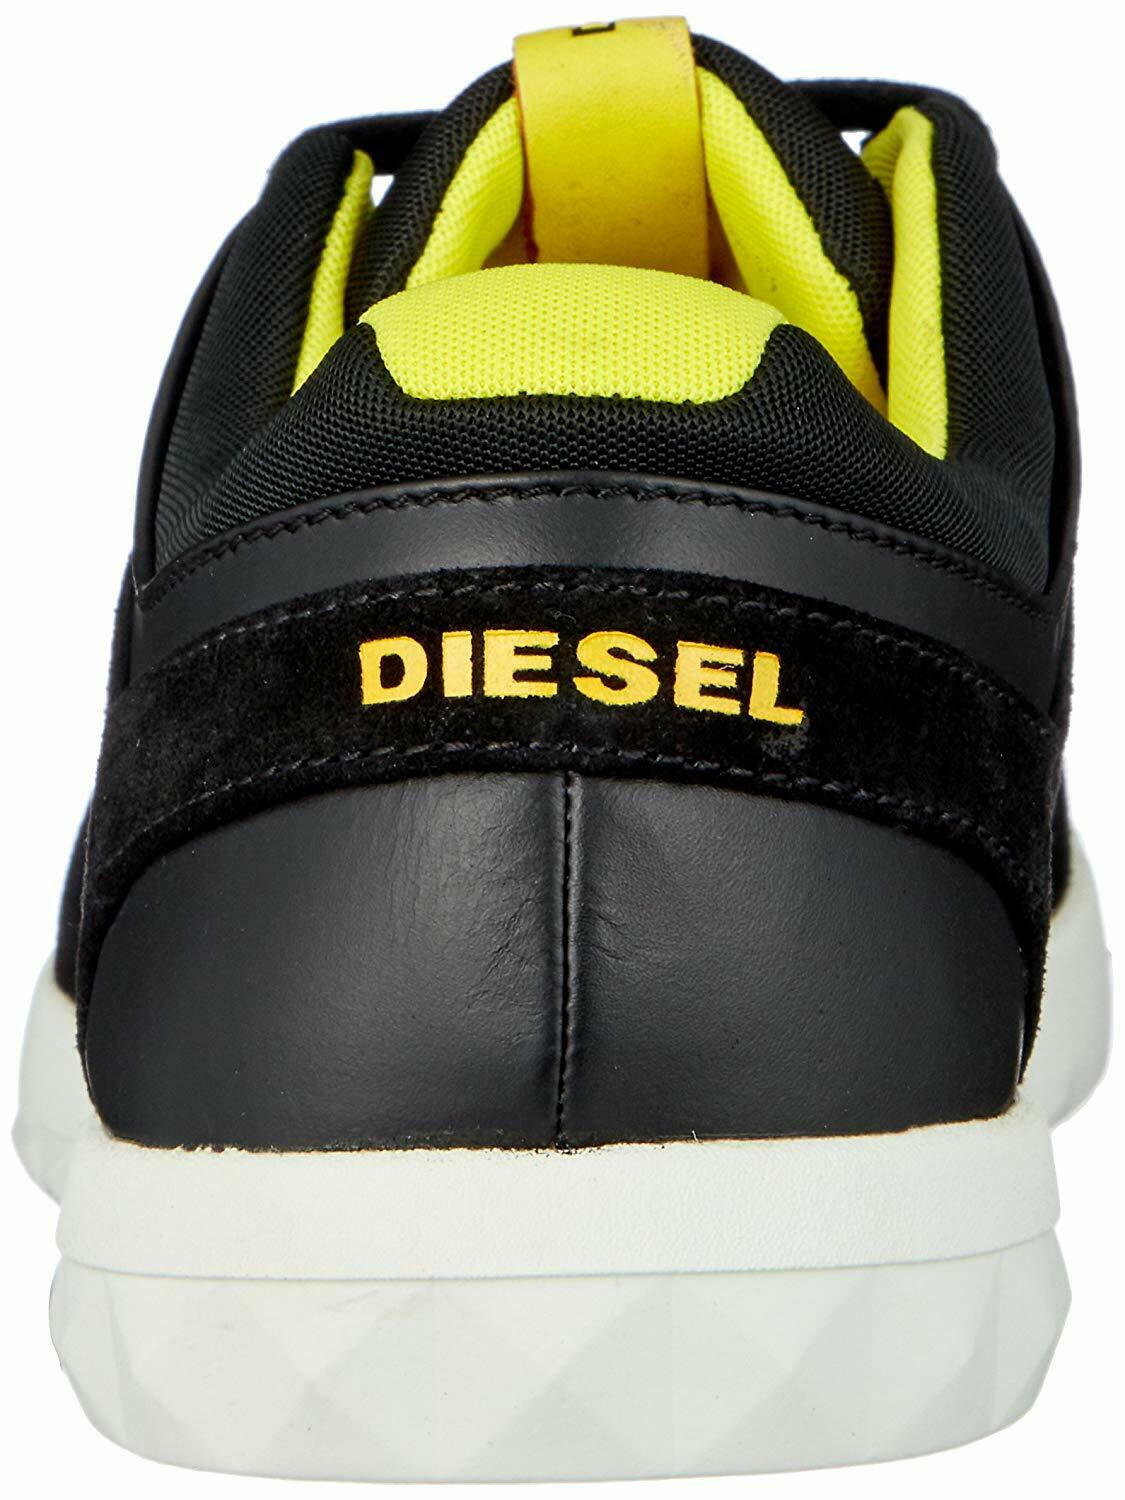 diesel men's casual shoes